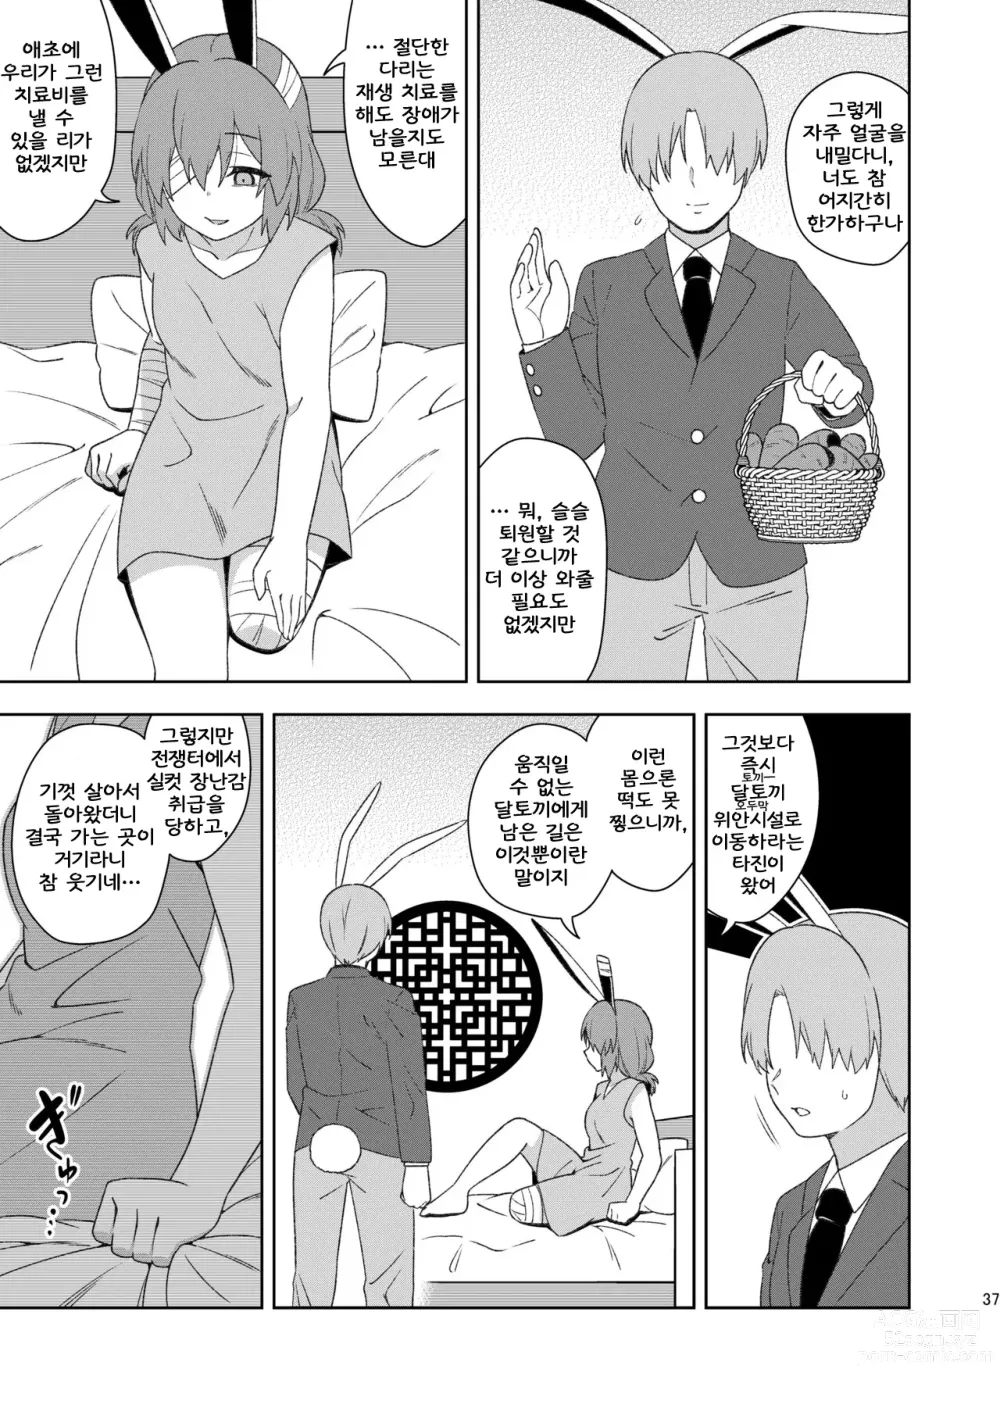 Page 37 of doujinshi 전화의 달토끼